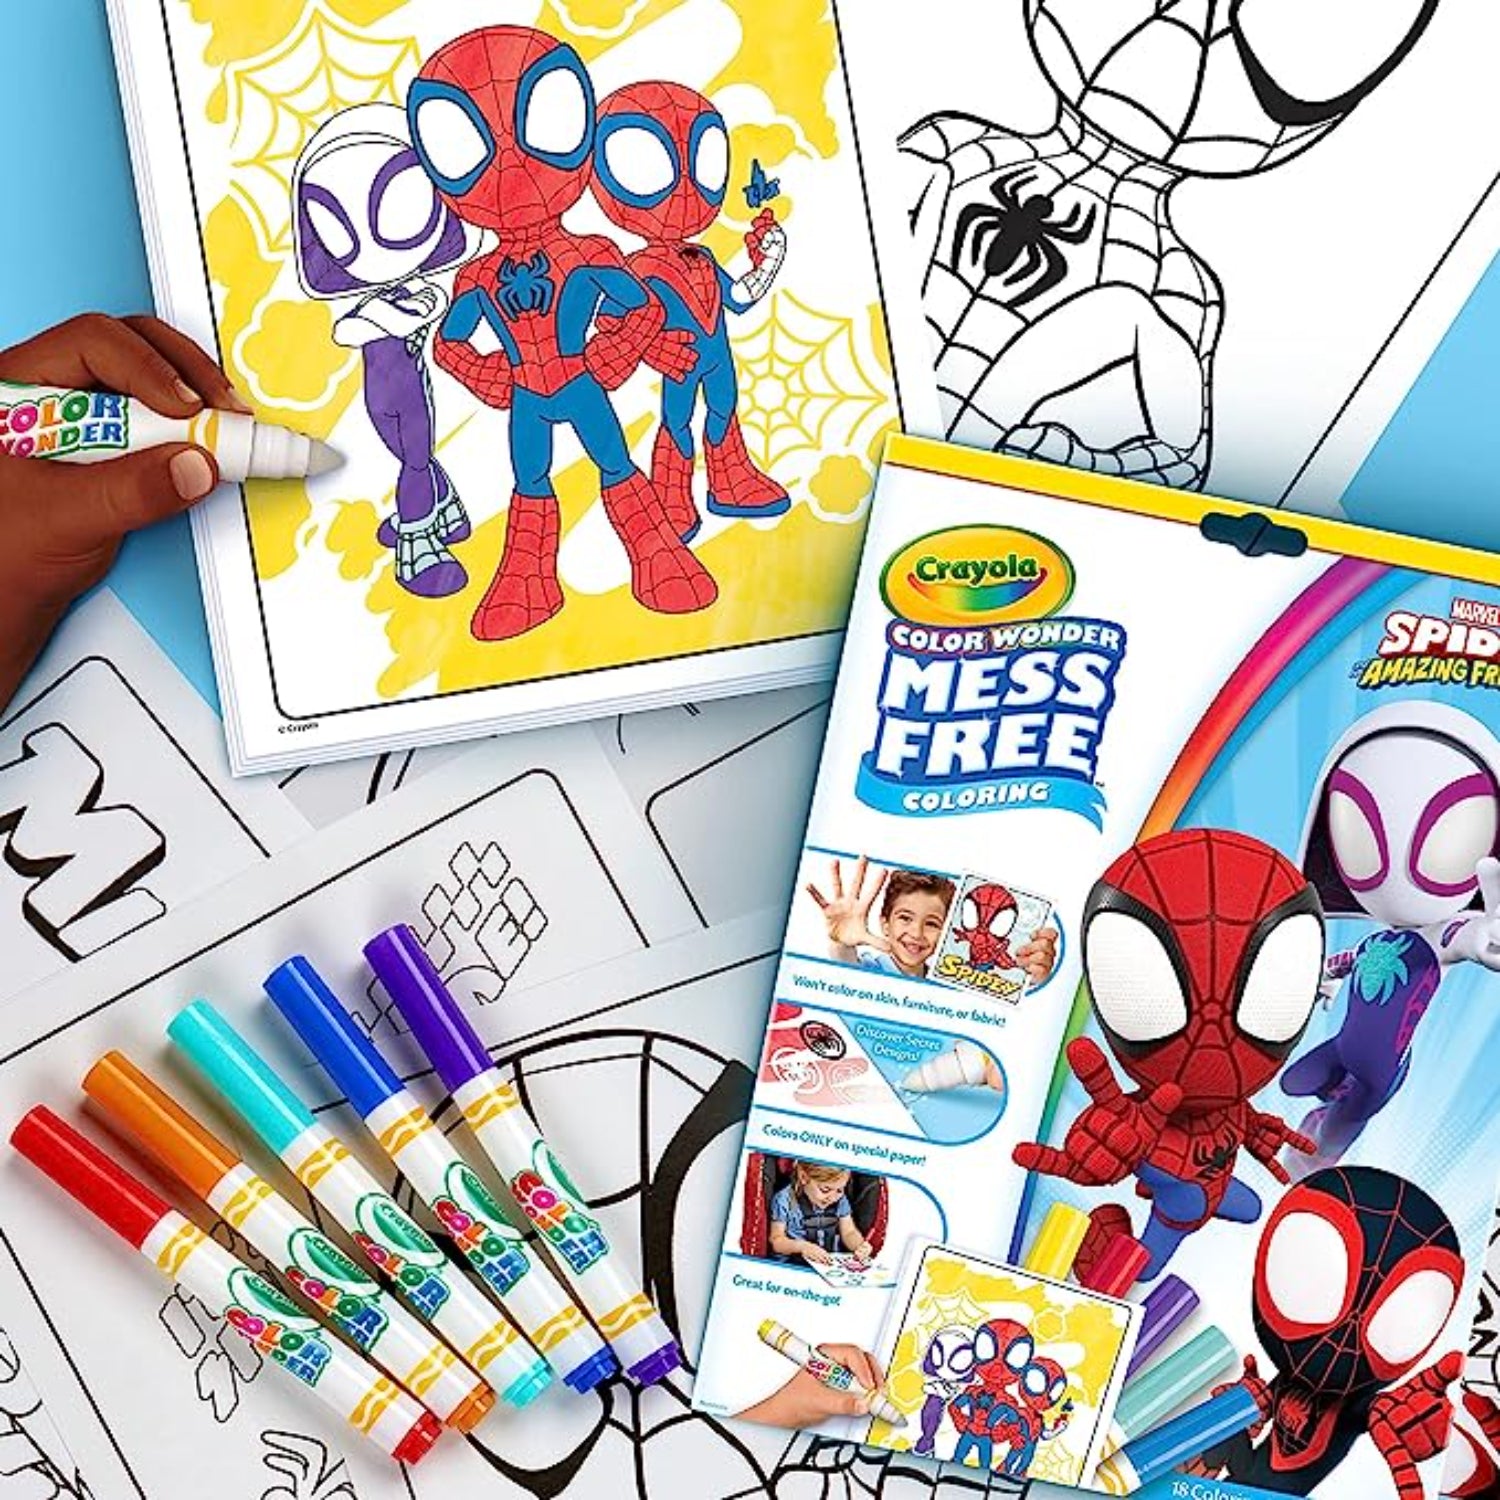 Spiderman Coloring Book